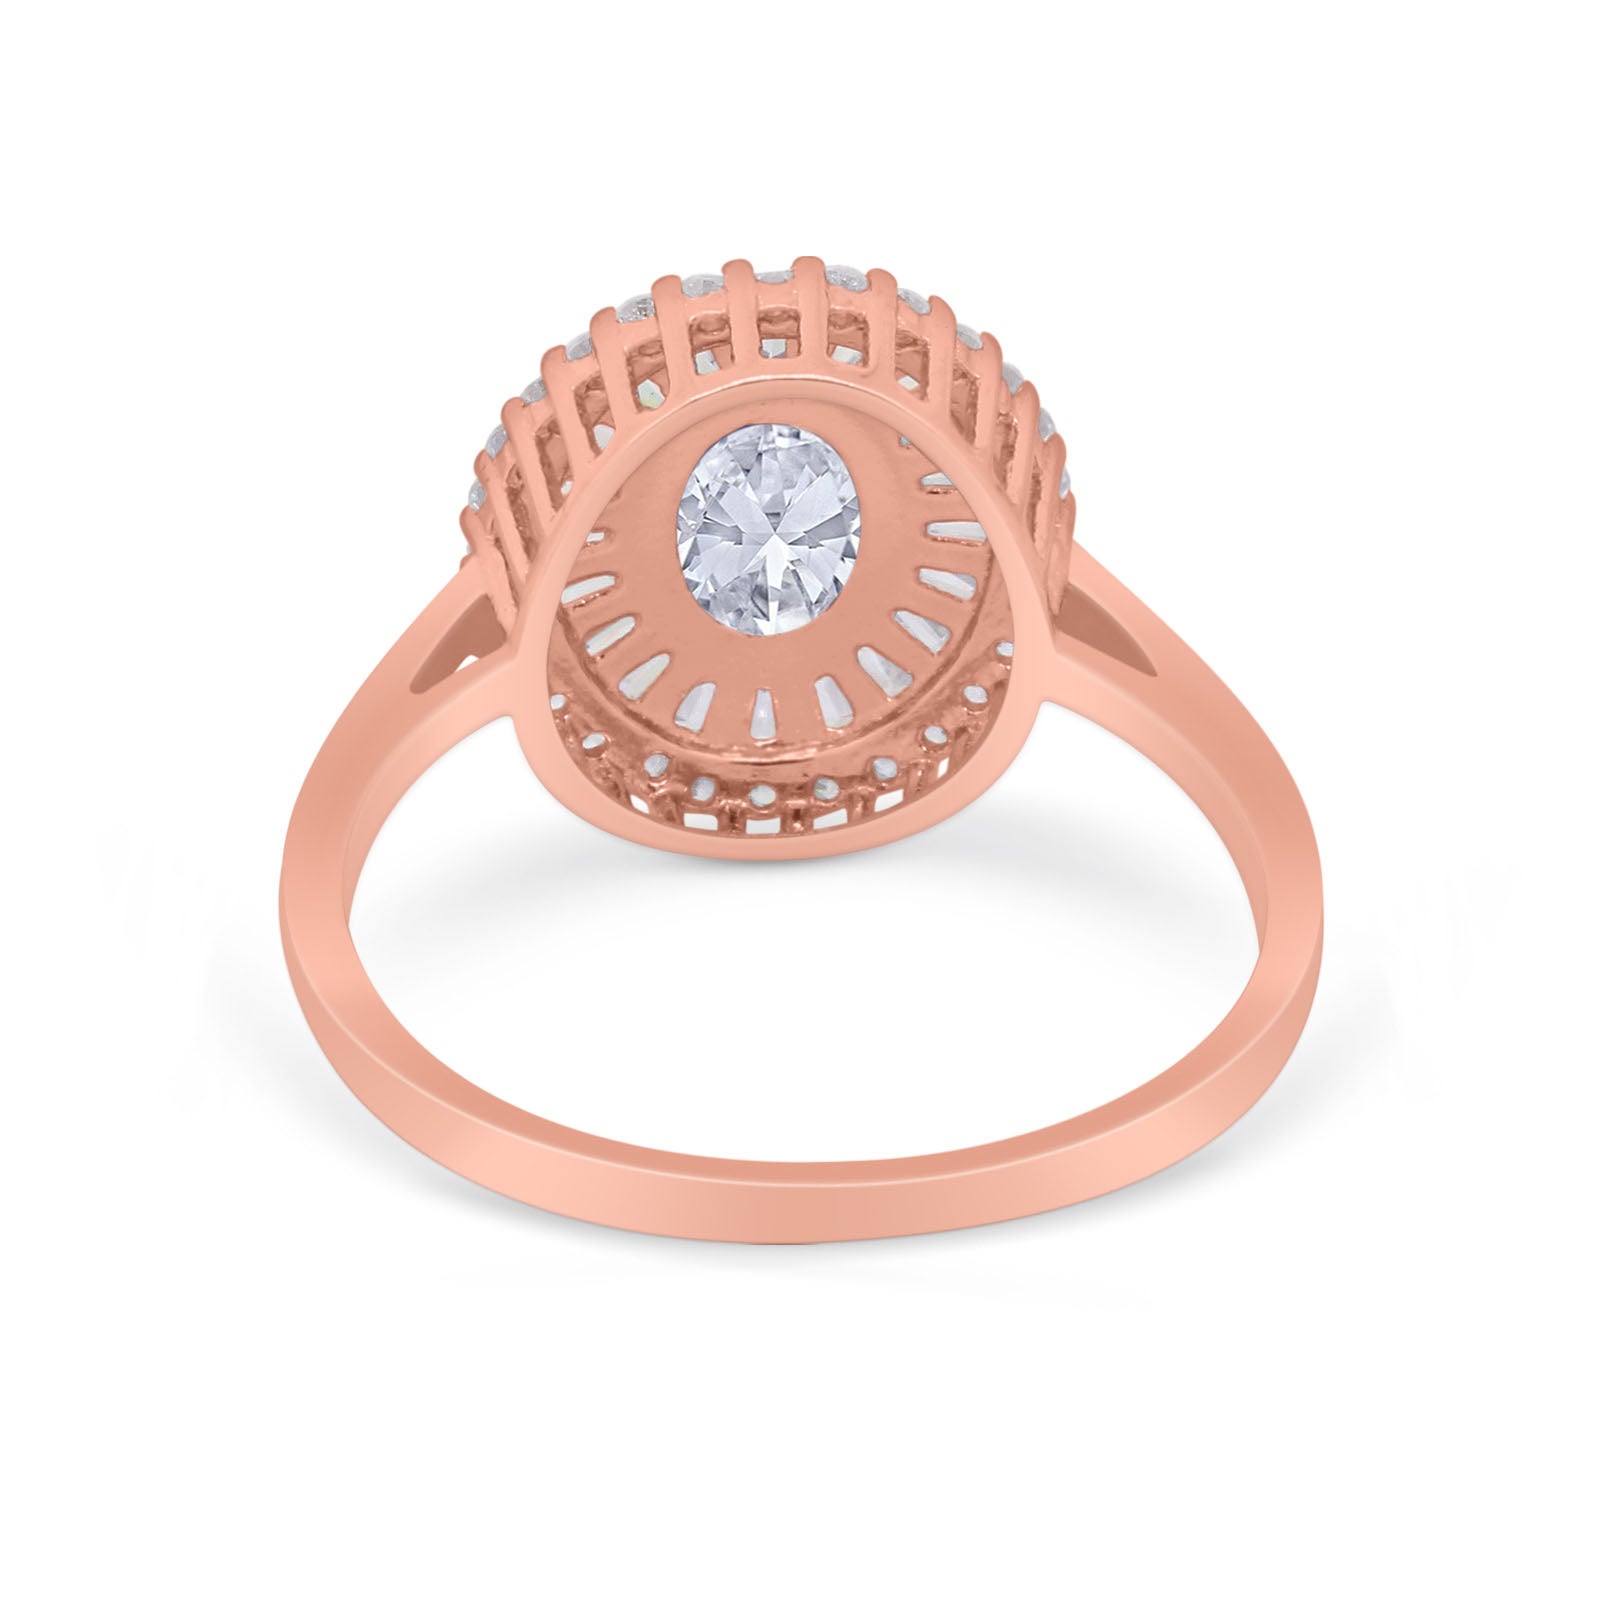 14K Gold Art Deco Oval Shape Bridal Simulated Cubic Zirconia Wedding Engagement Ring